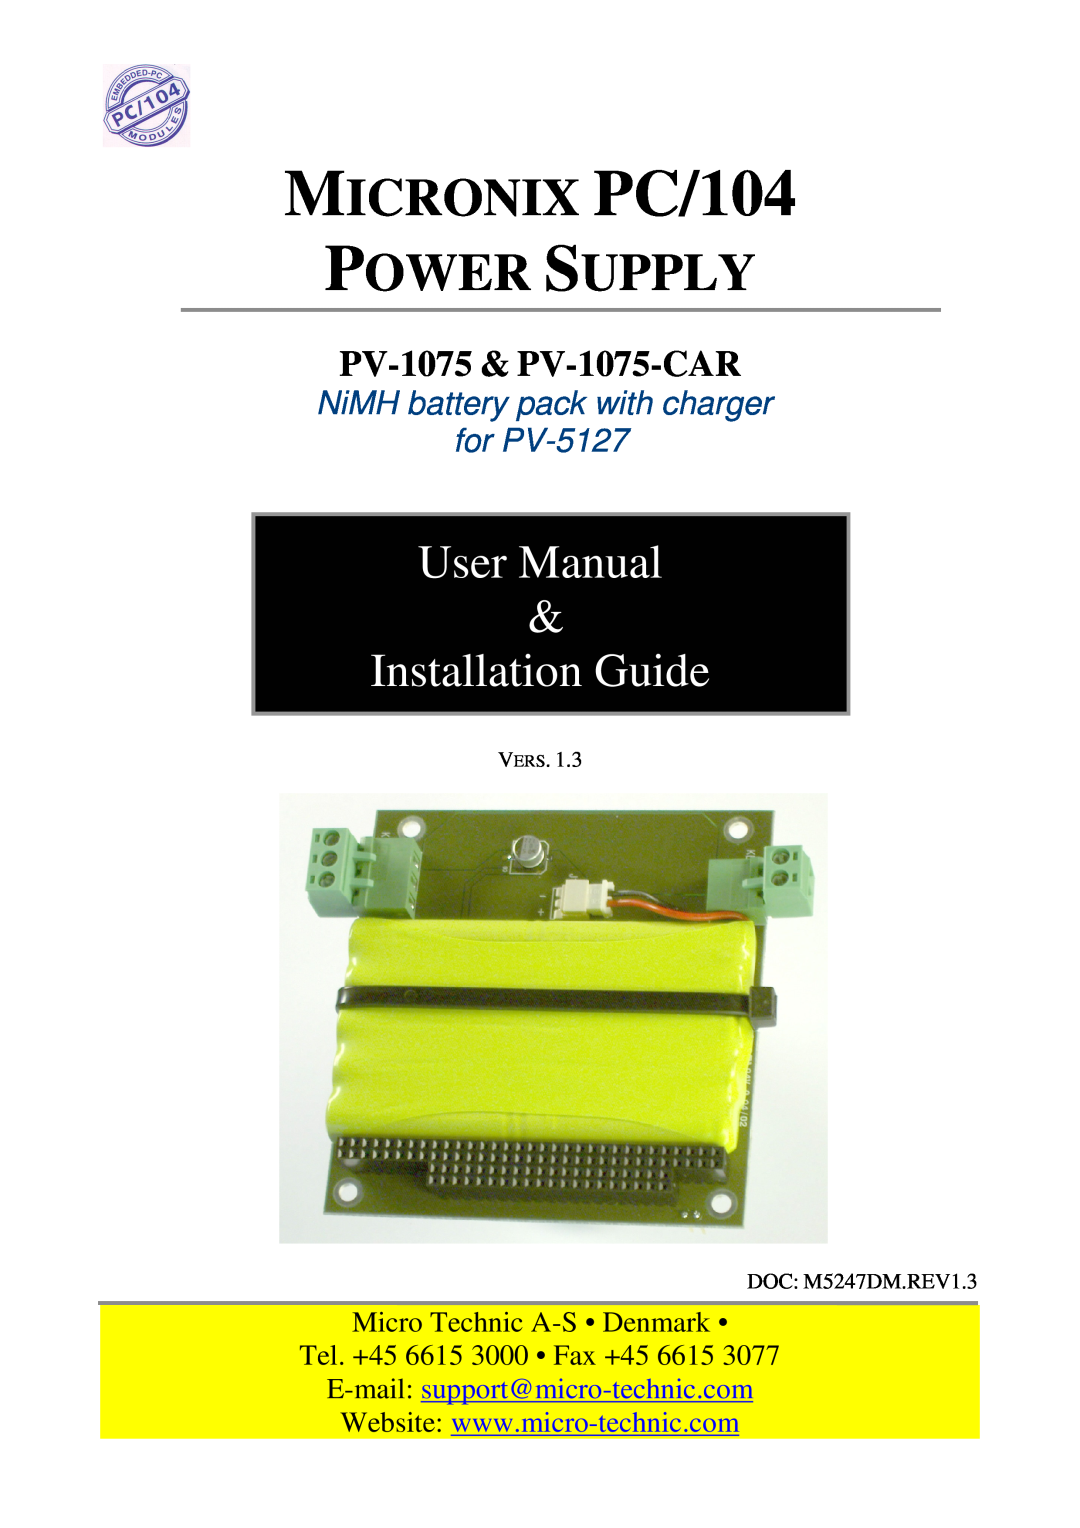 Micro Technic user manual MICRONIX PC/104 POWER SUPPLY, Installation Guide, PV-1075 & PV-1075-CAR 